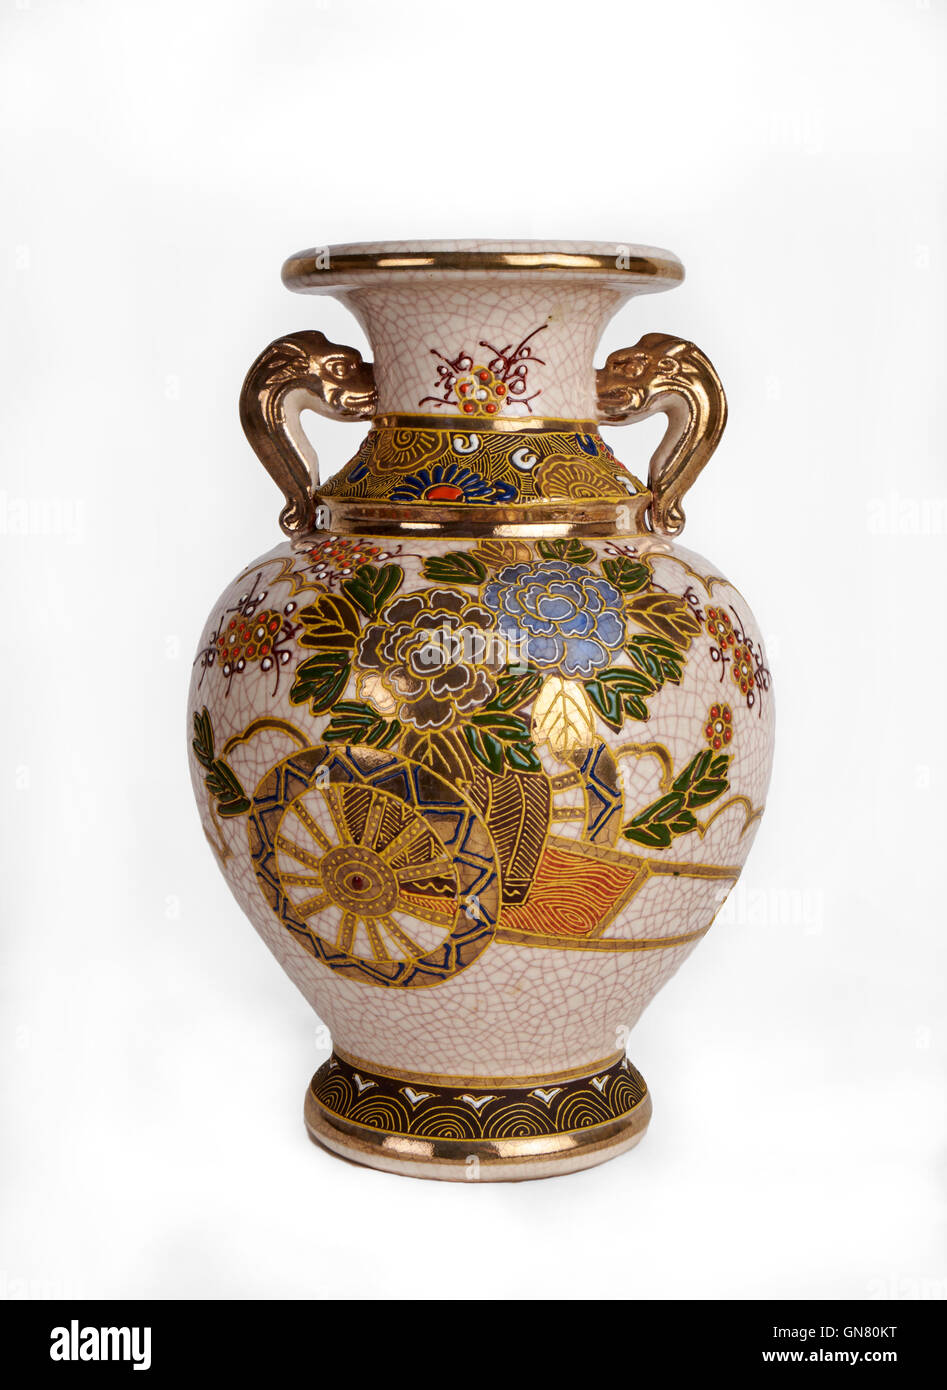 Antique Japanese porcelain vase isolated against a white background. Stock Photo